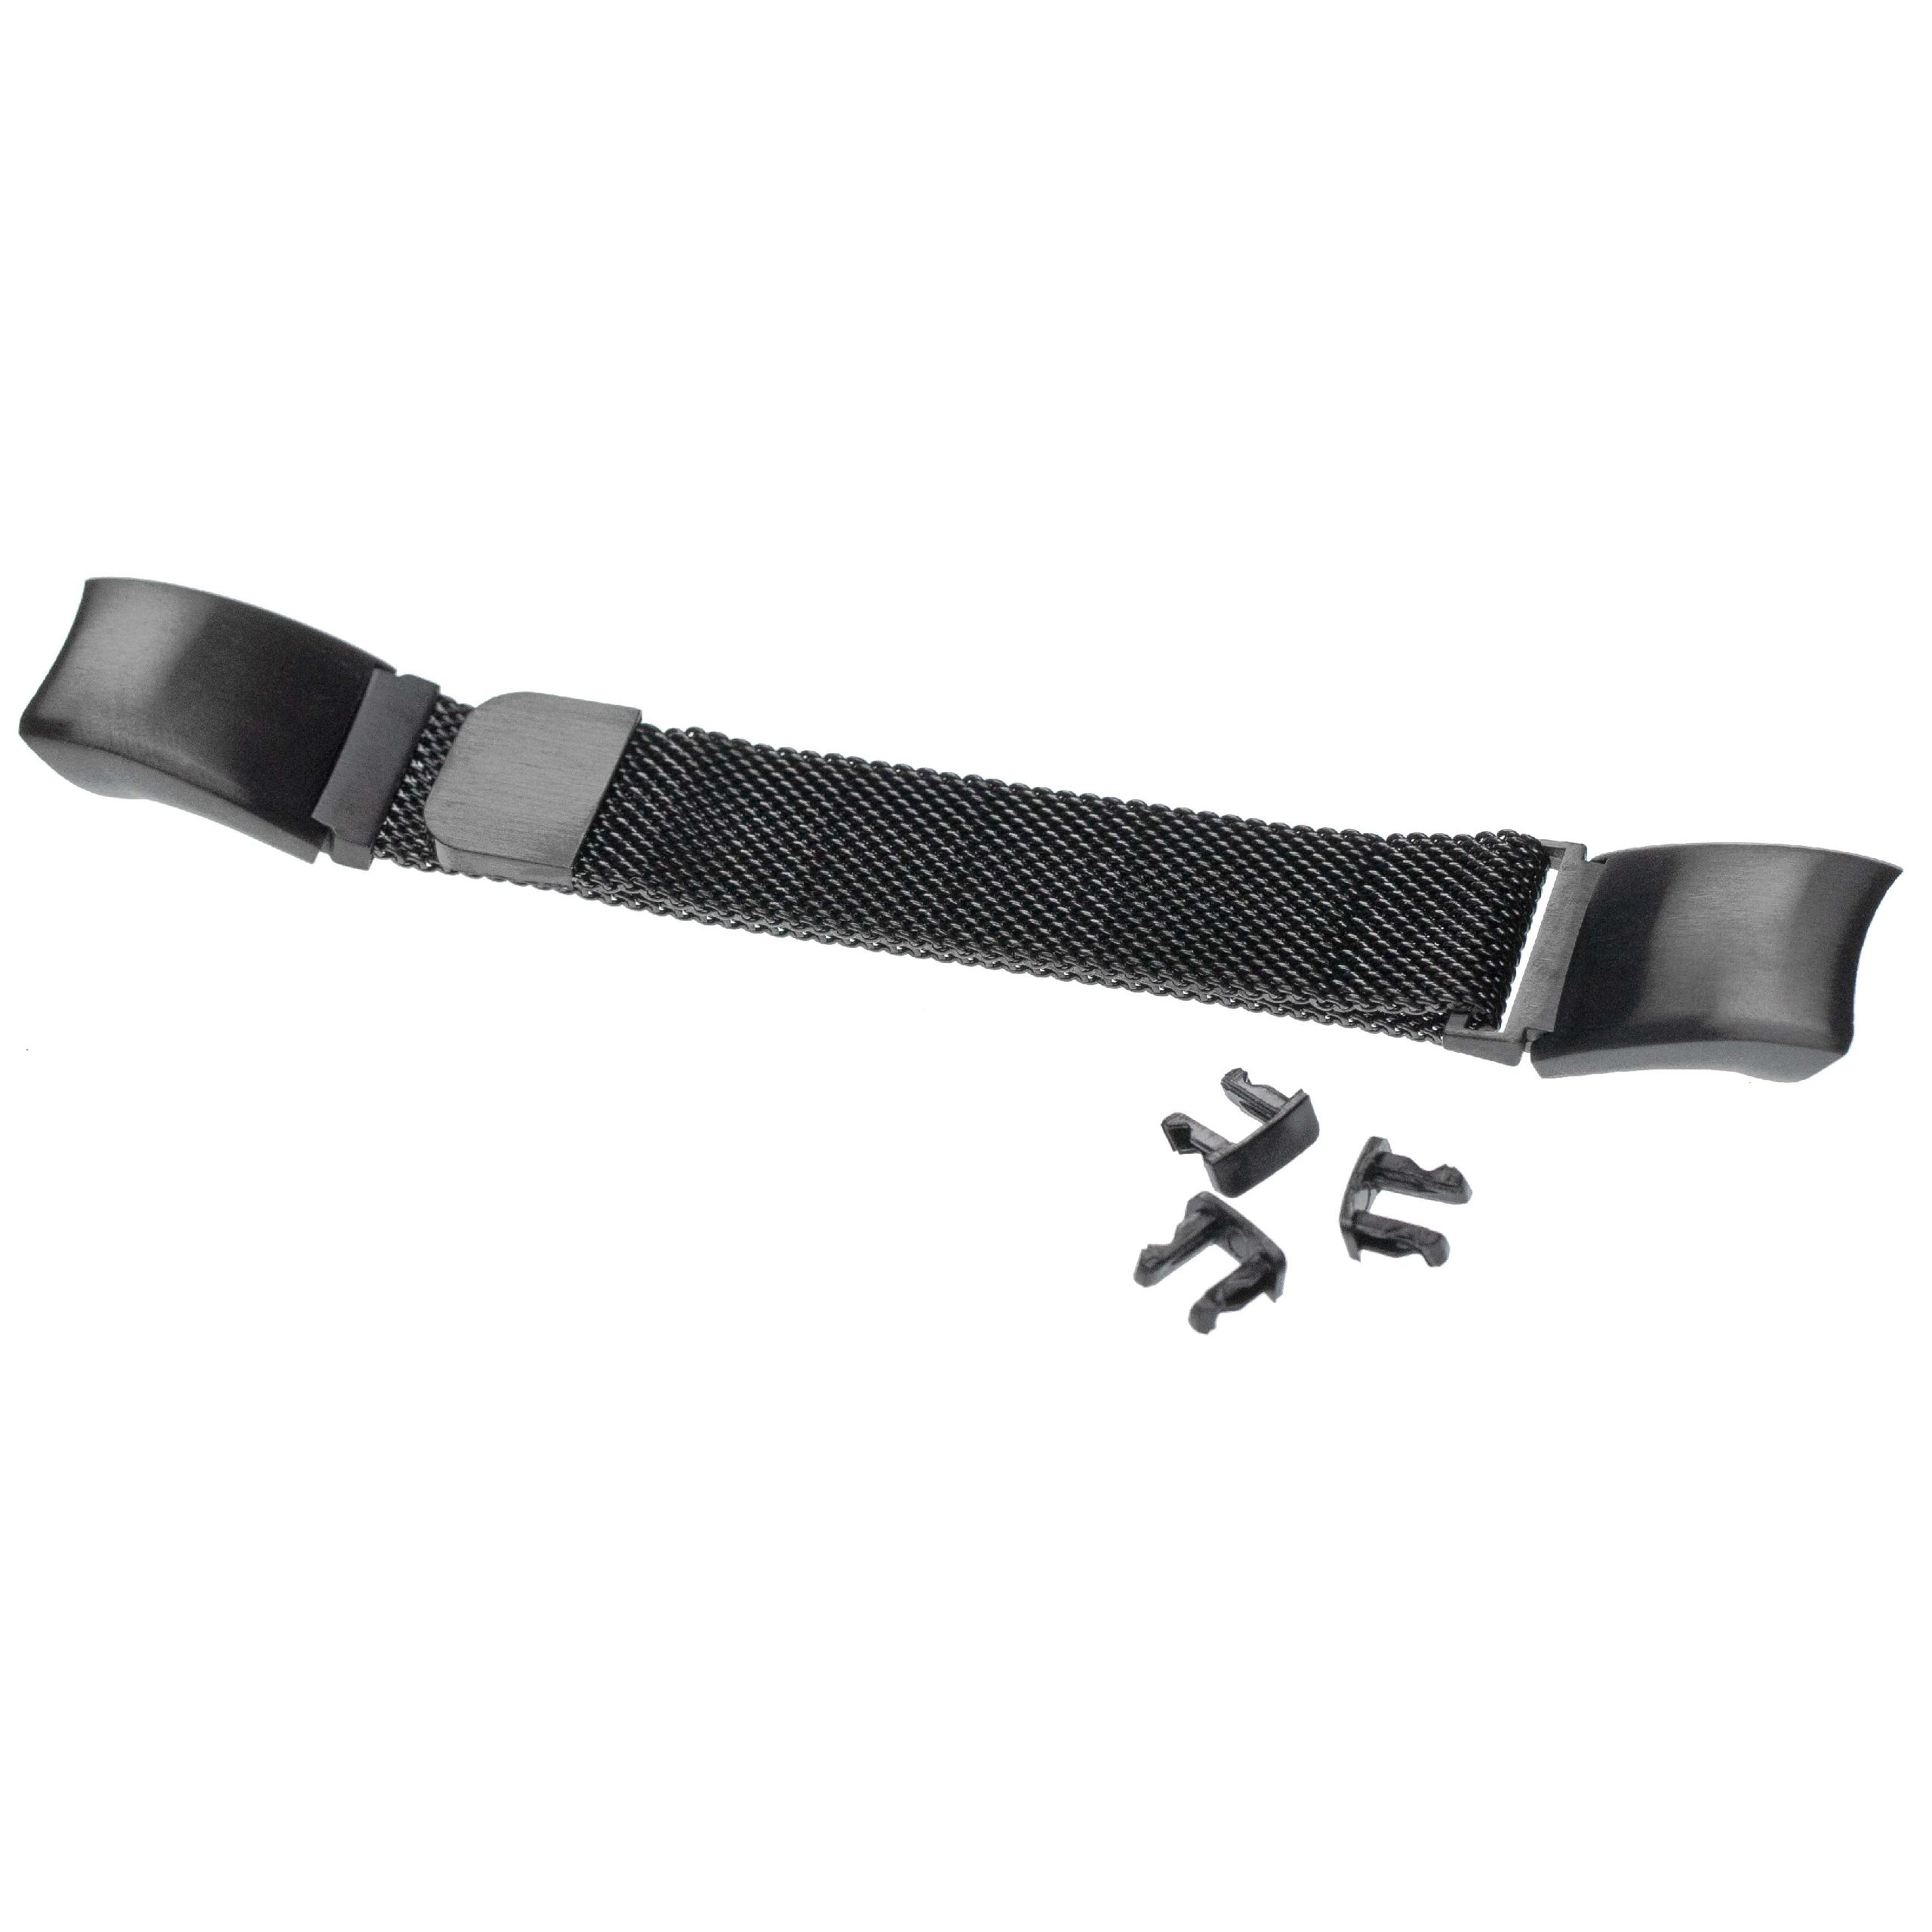 correa para Huawei Honor Band 4 / Honor Band 5 smartwatch - largo 23 cm, ancho 16 mm, acero inoxidable, negro